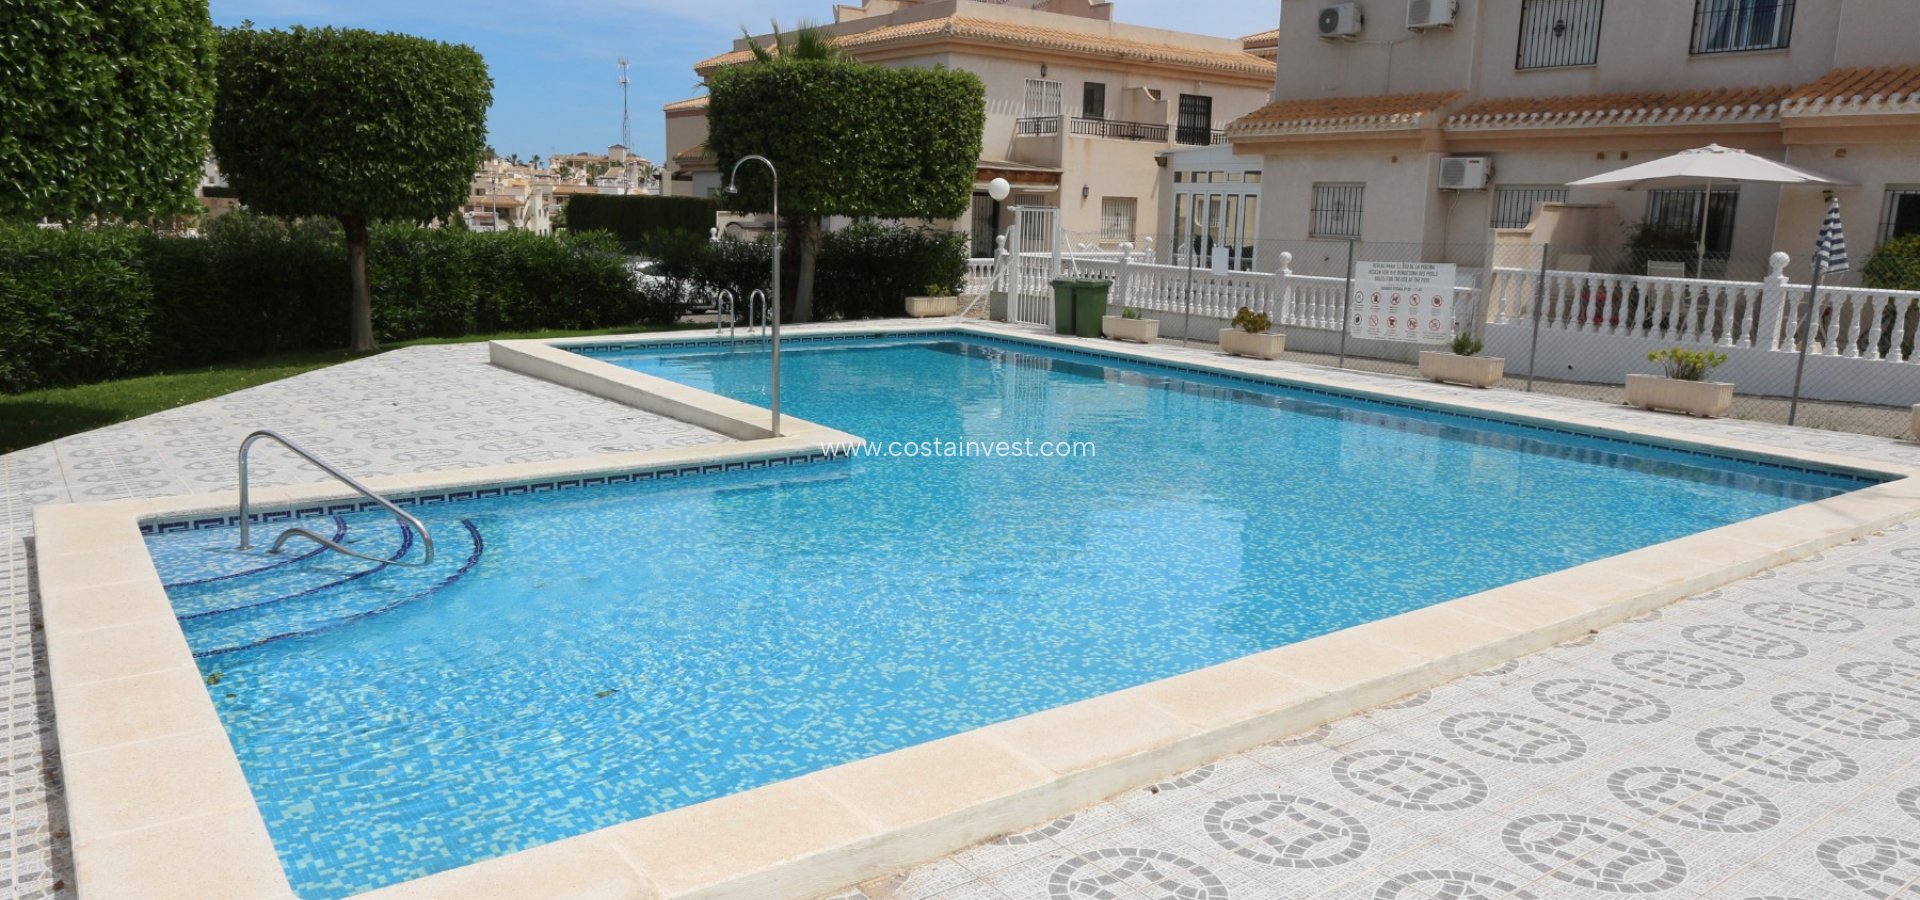 2 bedroom townhouse in Playa Flamenca walking distance to beach & shopping center Zenia Boulevard - Pool views